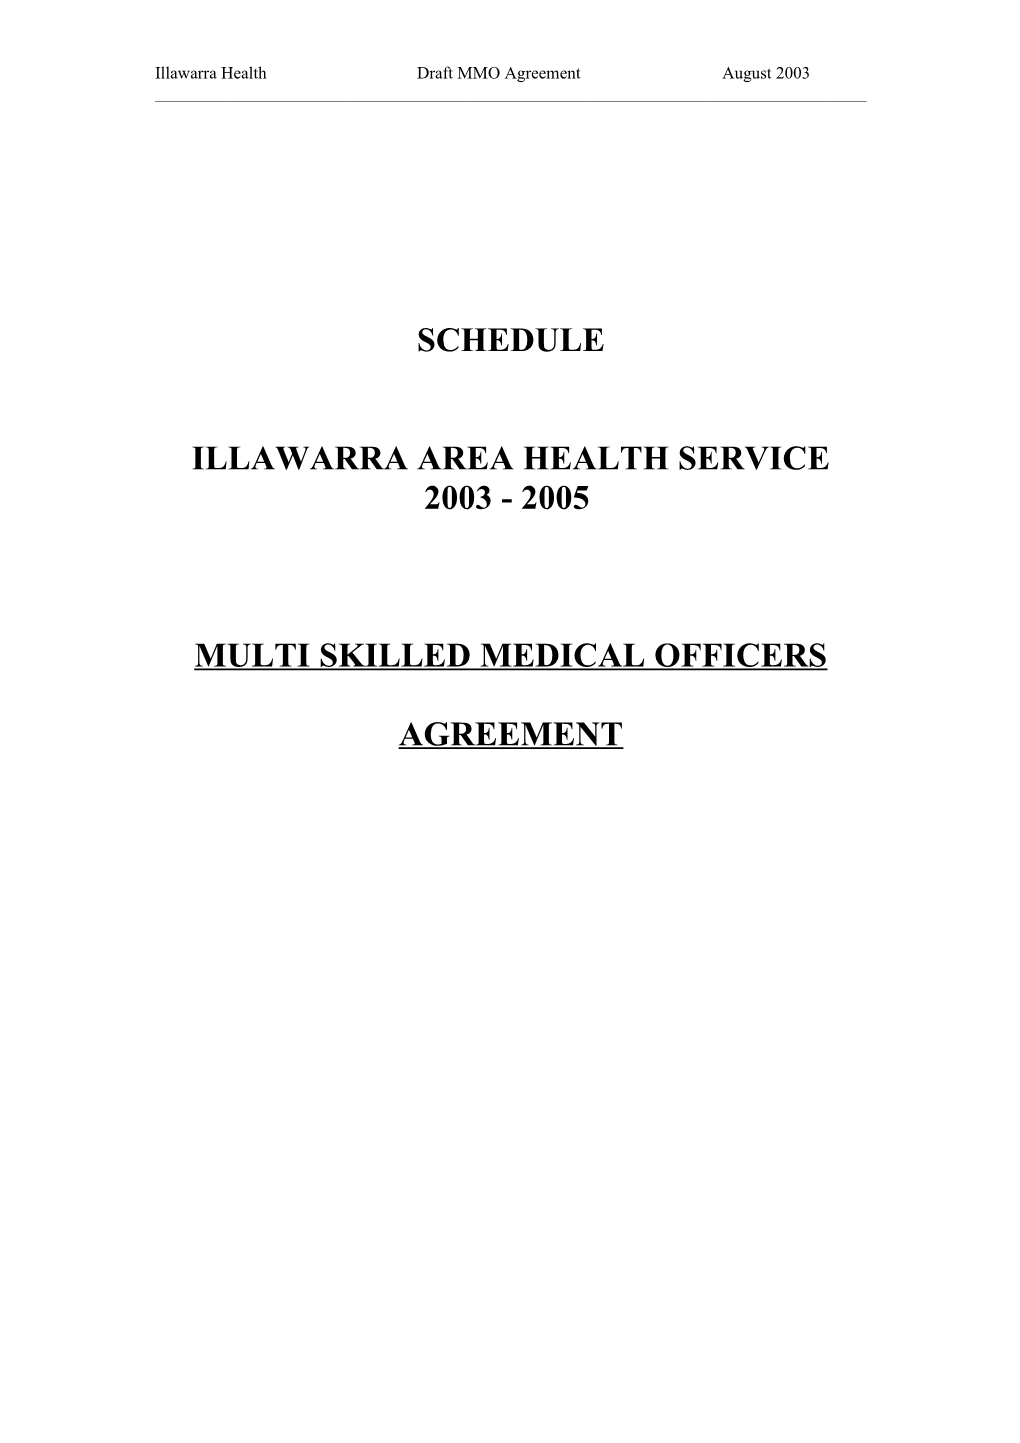 2000 Illawarra Area Health Service